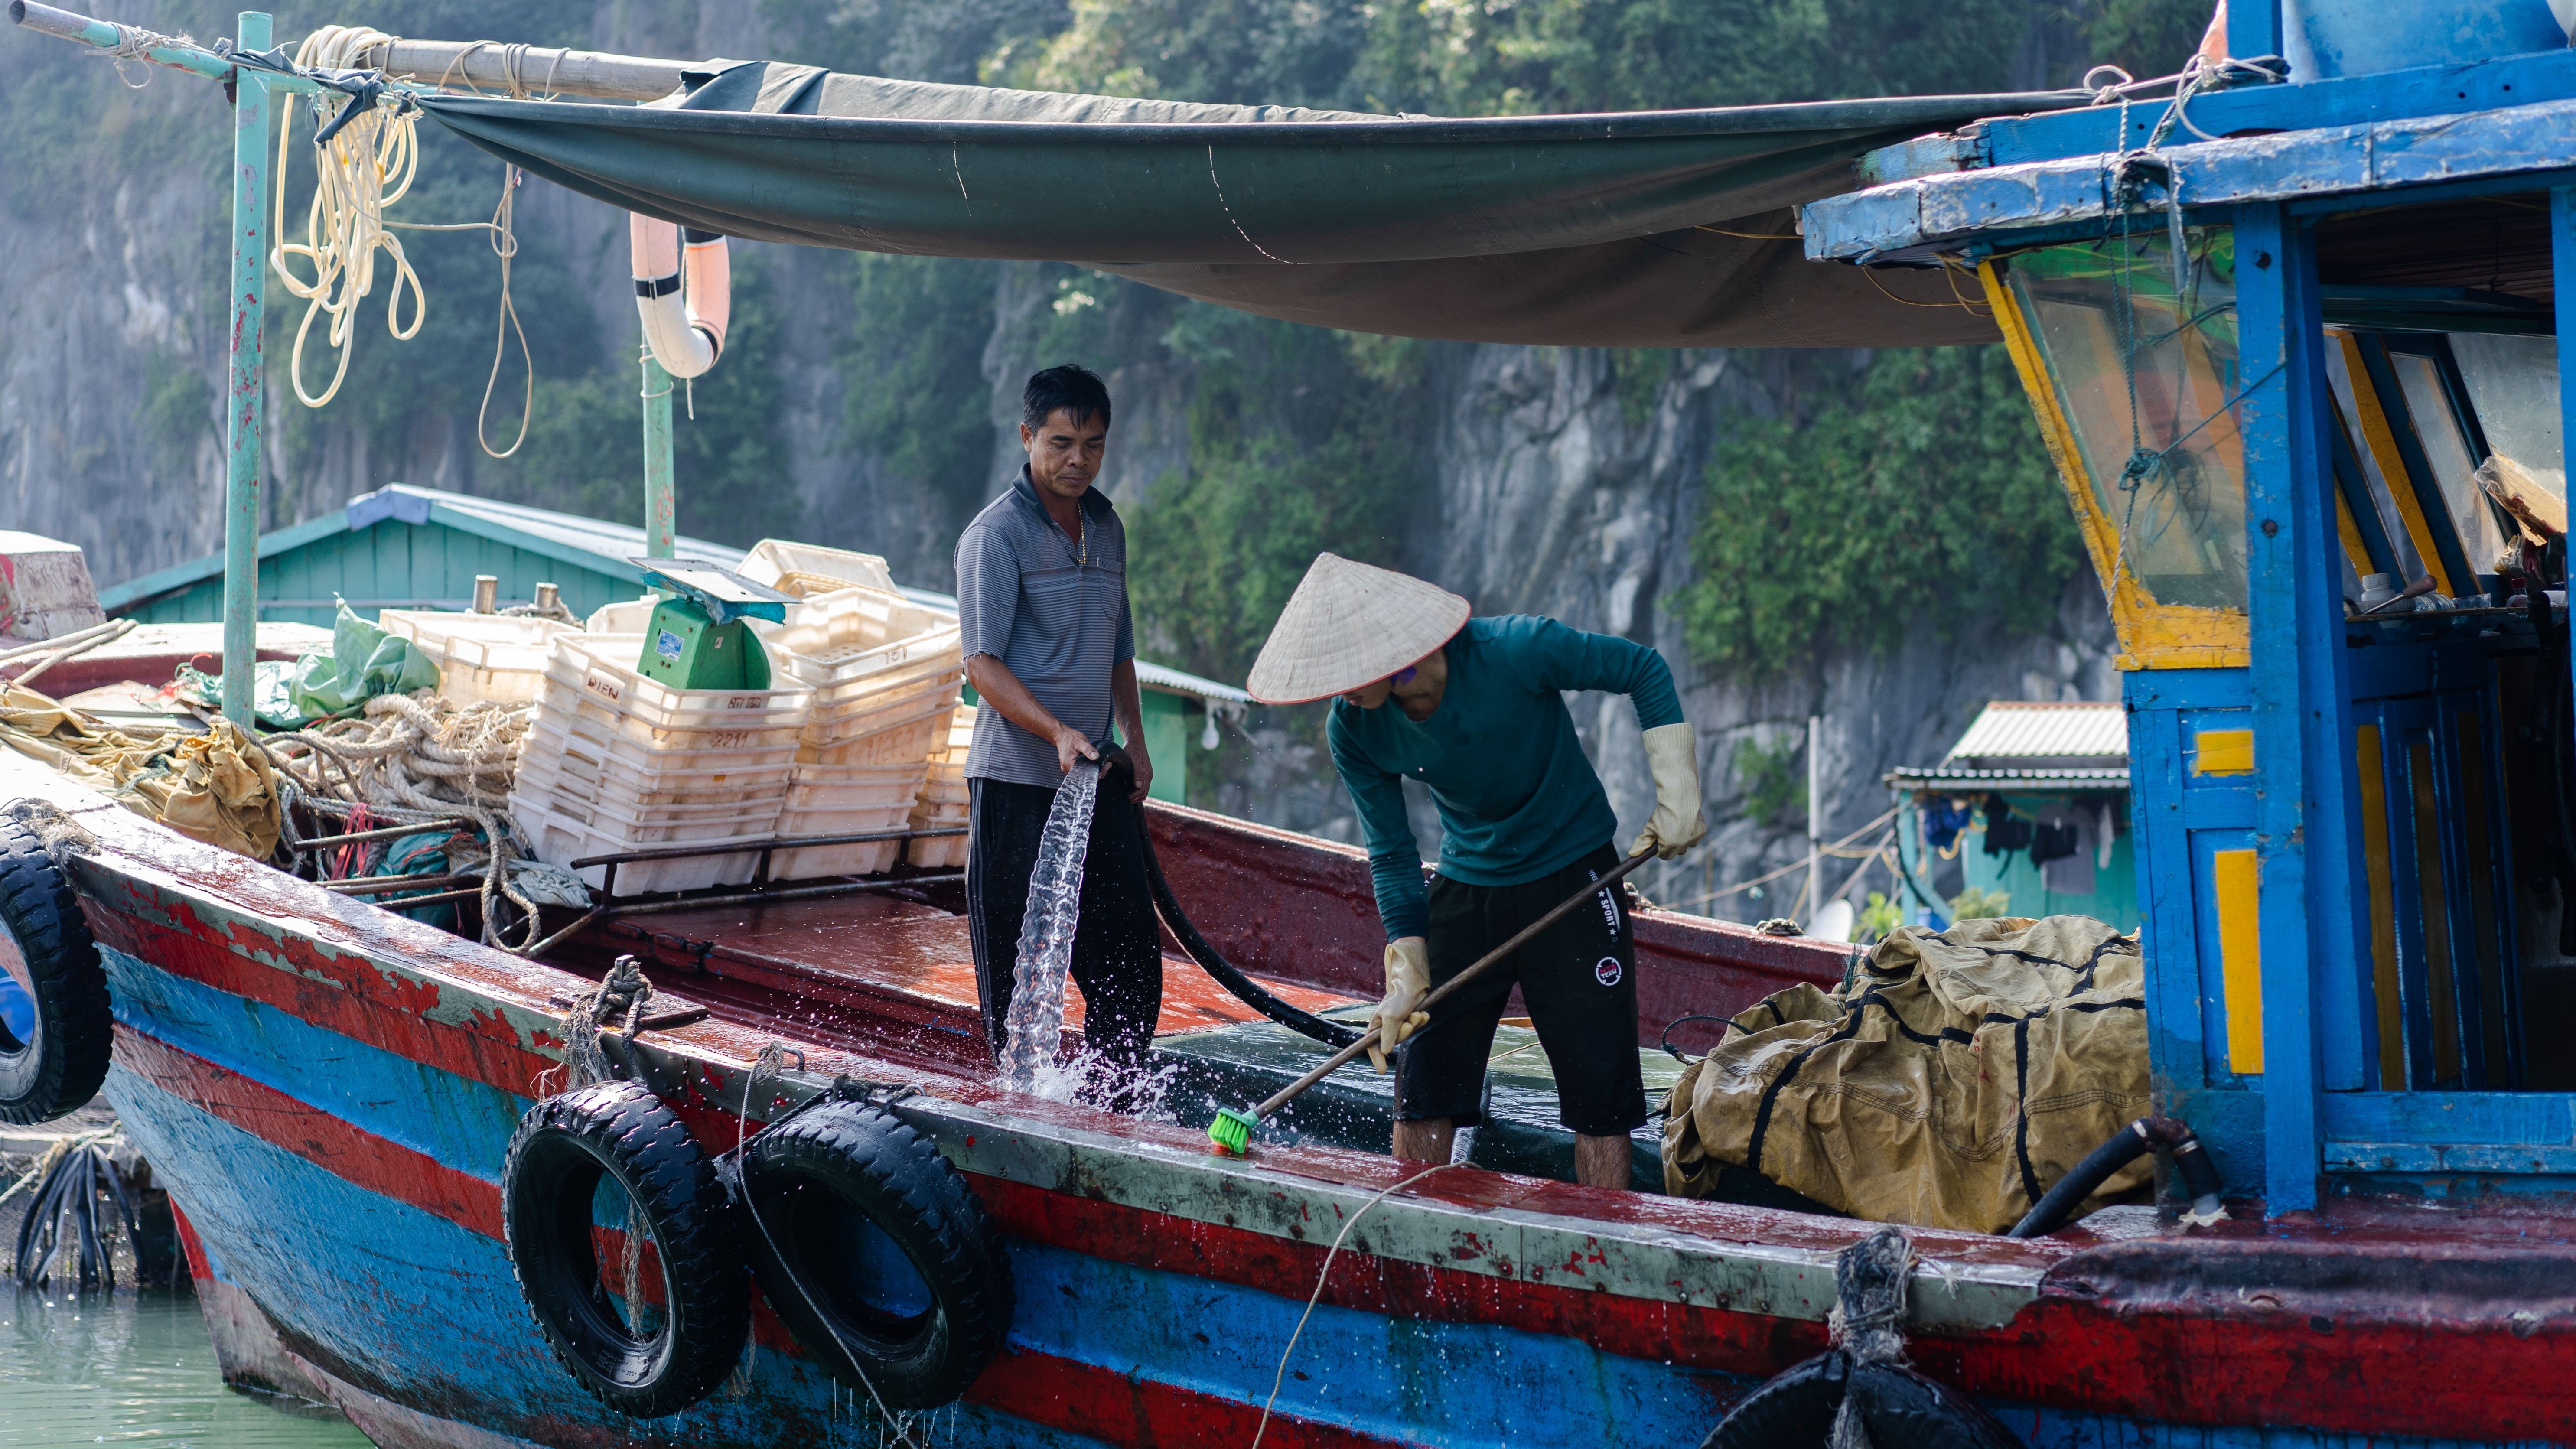 Local life in Haiphong, Source: Photo by Eirik Sarstein on Unsplash